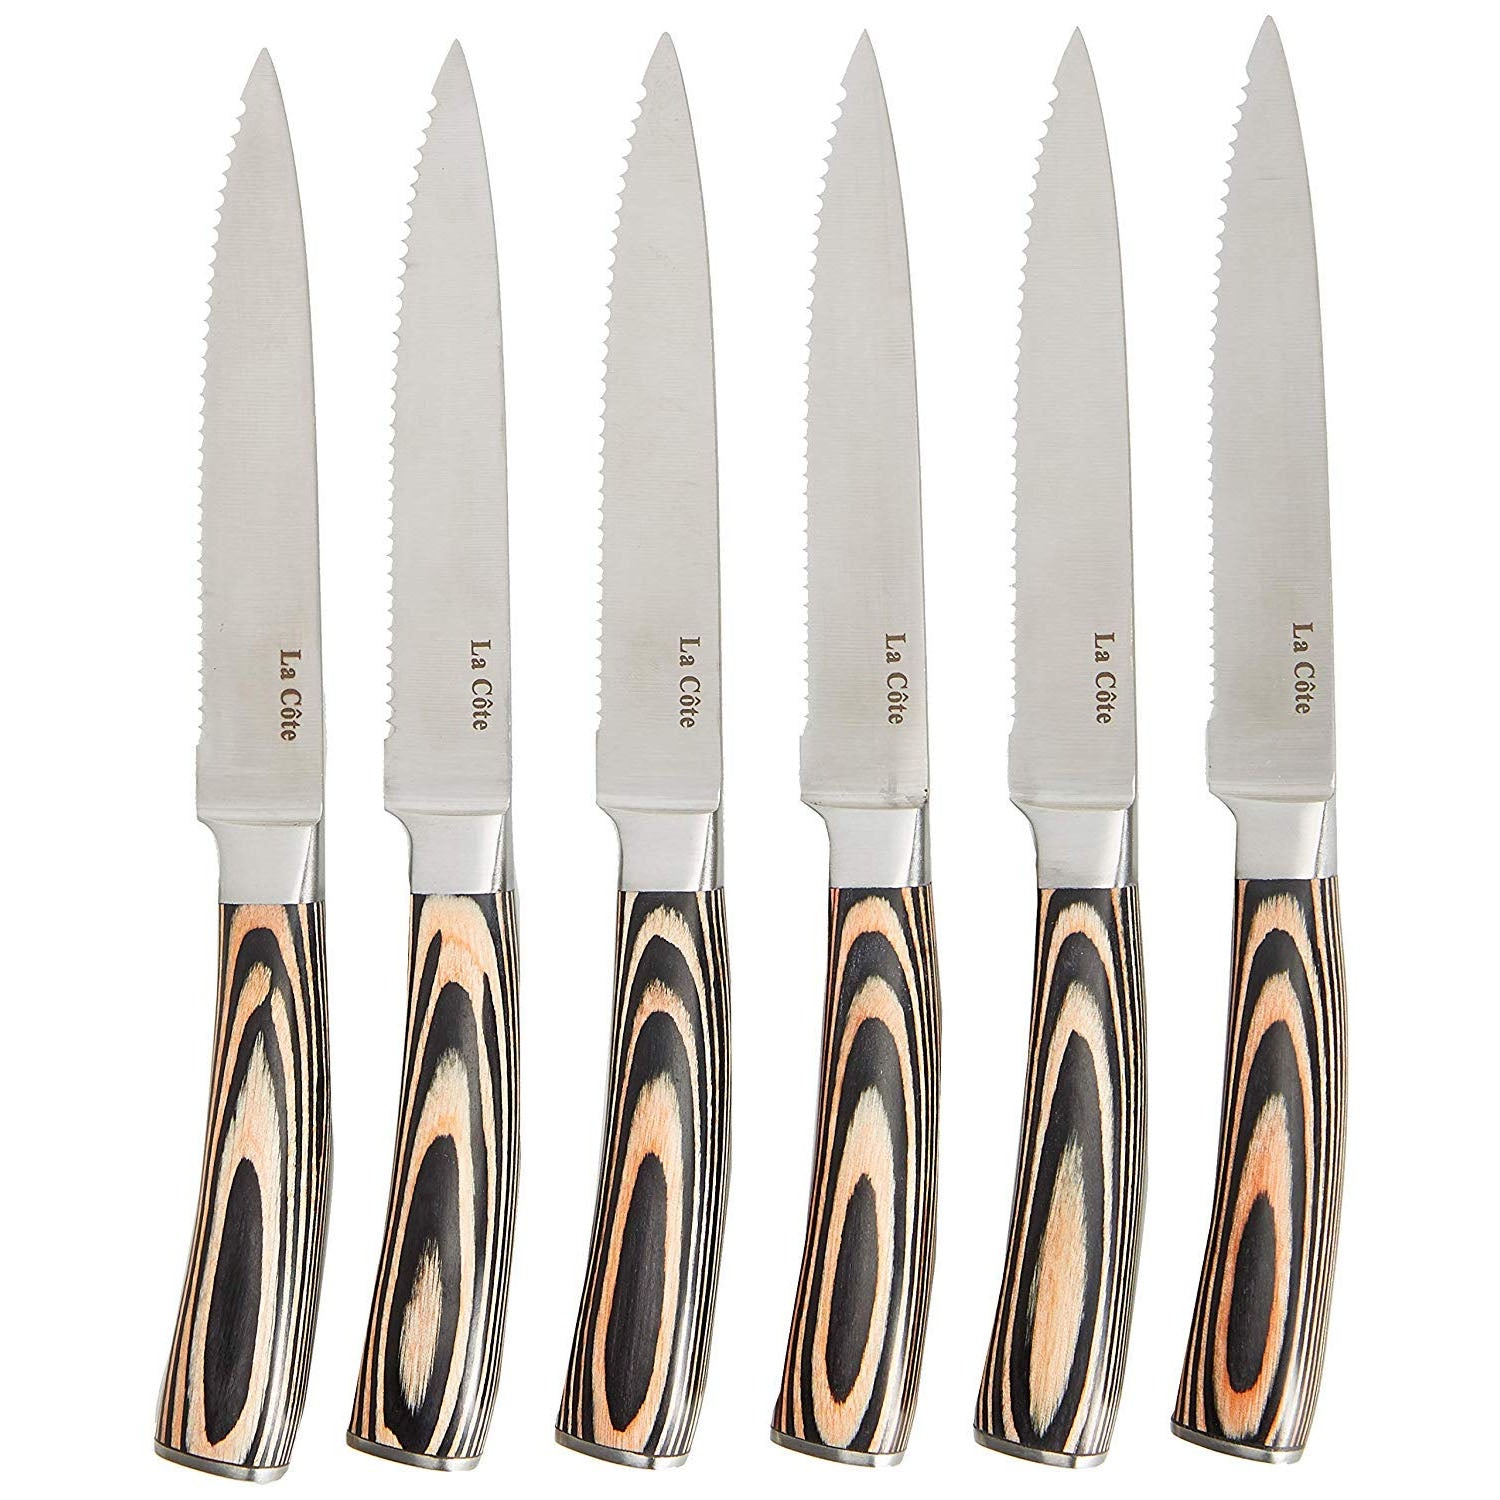 La Cote 6 Piece Steak Knives Set Japanese Stainless Steel Pakka Wood Handle In Gift Box (6 PC Steak Knife Set)